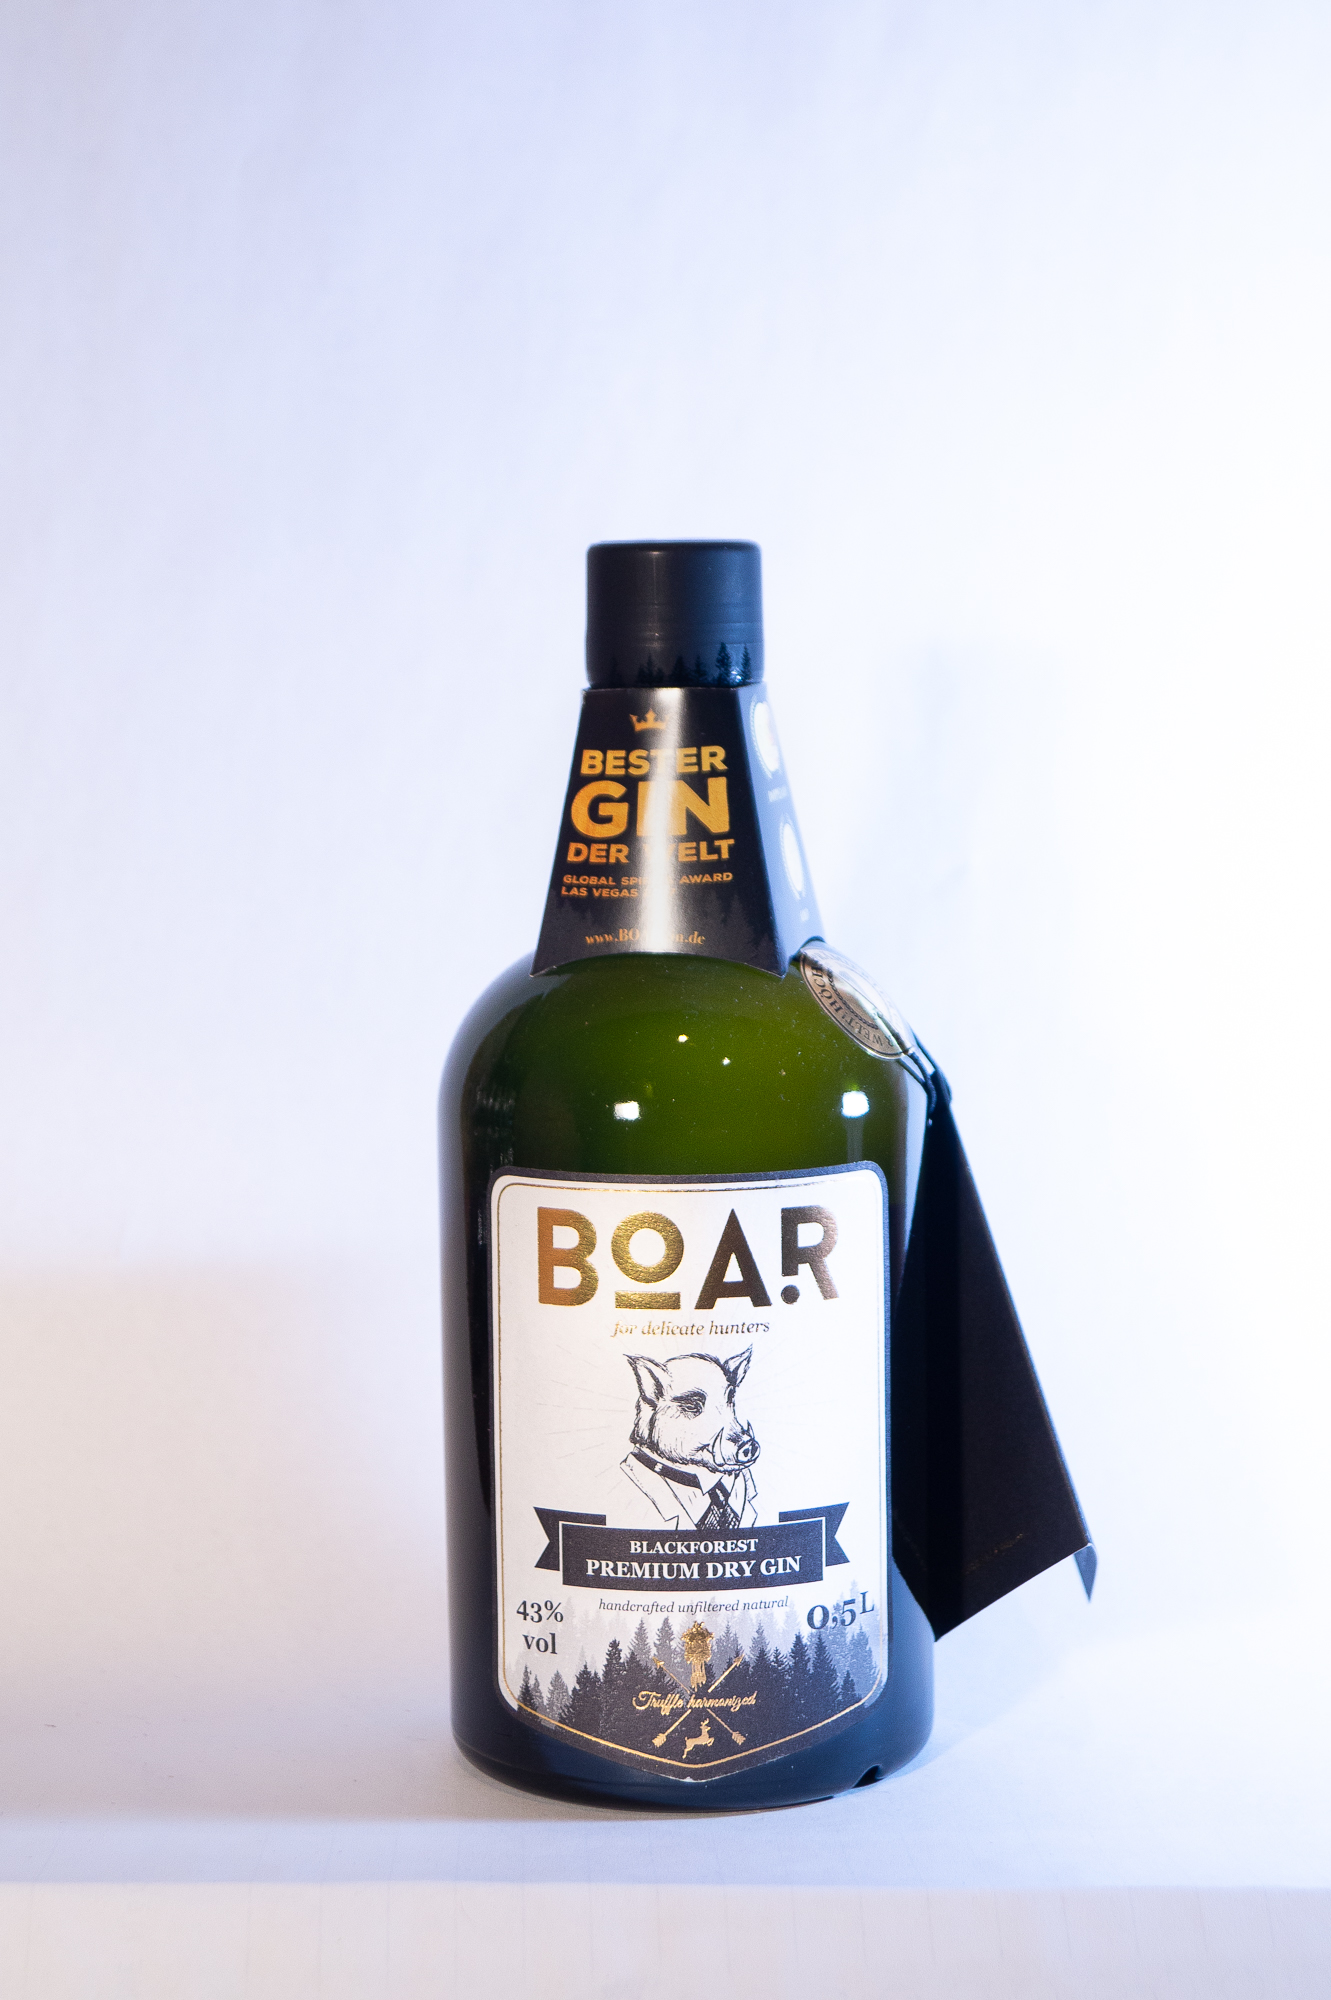 Boar Premium Dry Gin 